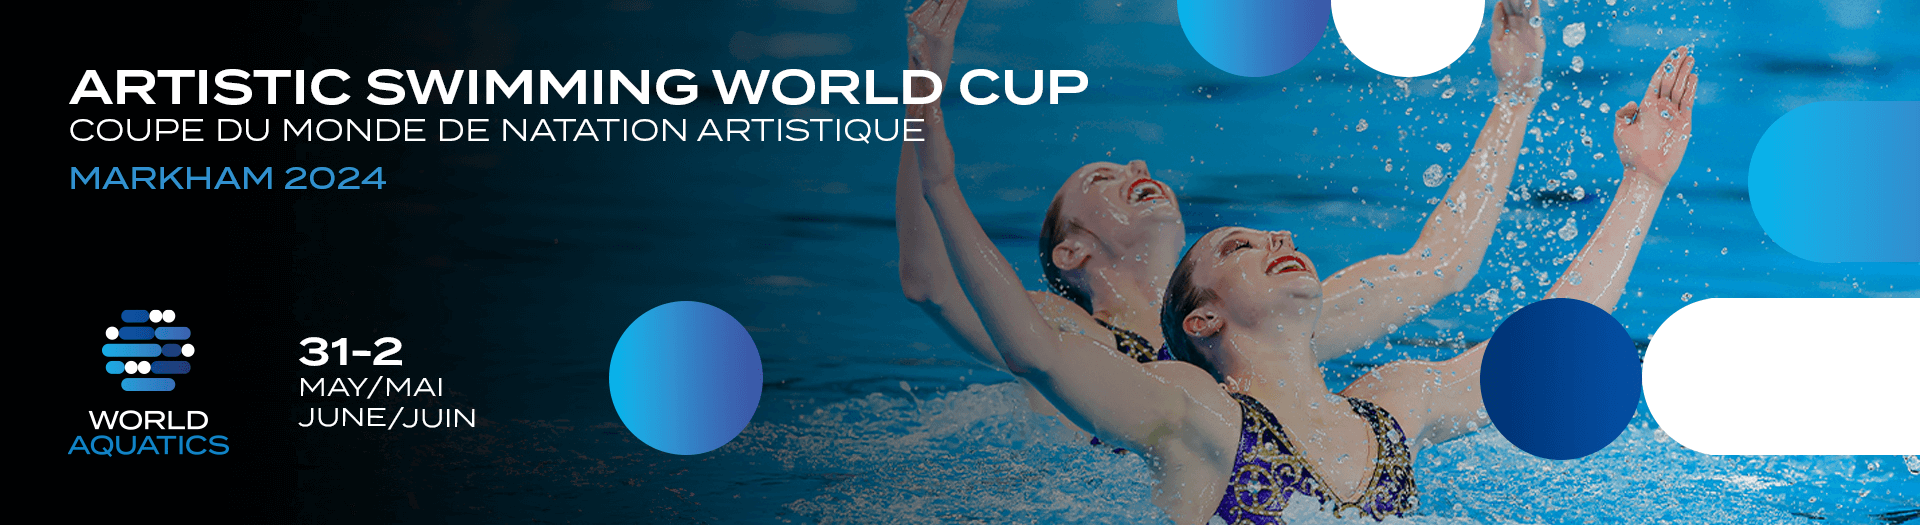 2024 World Aquatics Artistic Swimming World Cup